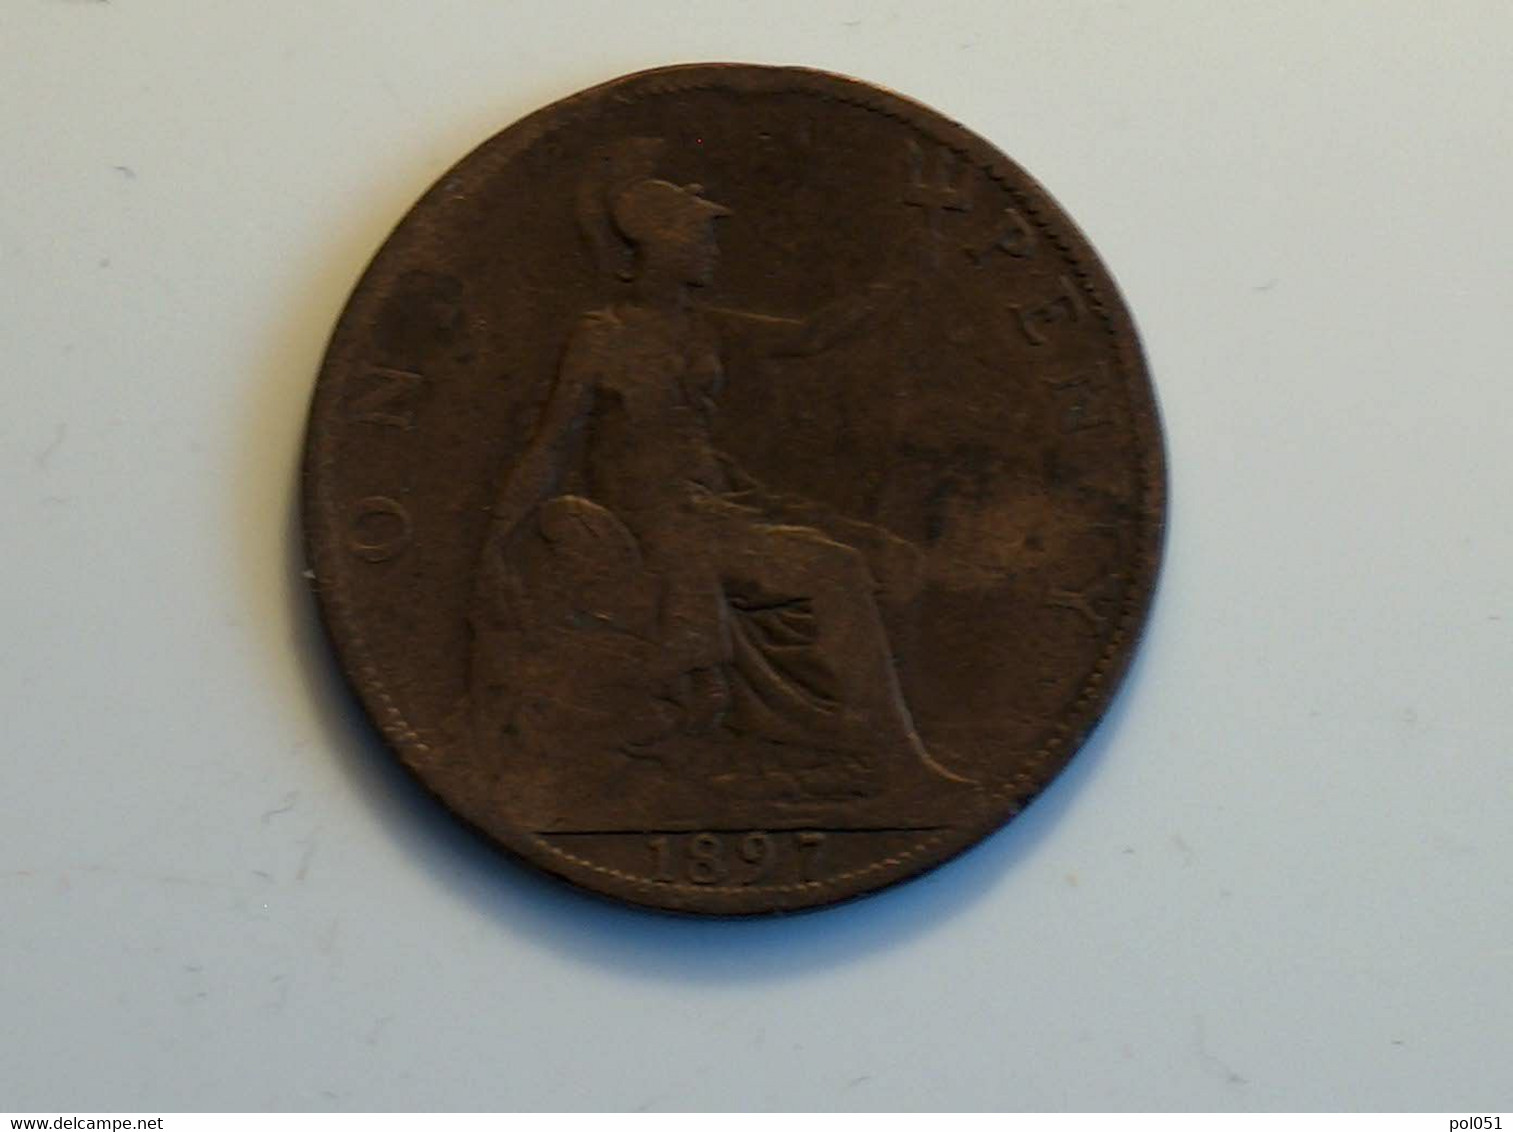 UK 1 Penny 1897 - D. 1 Penny